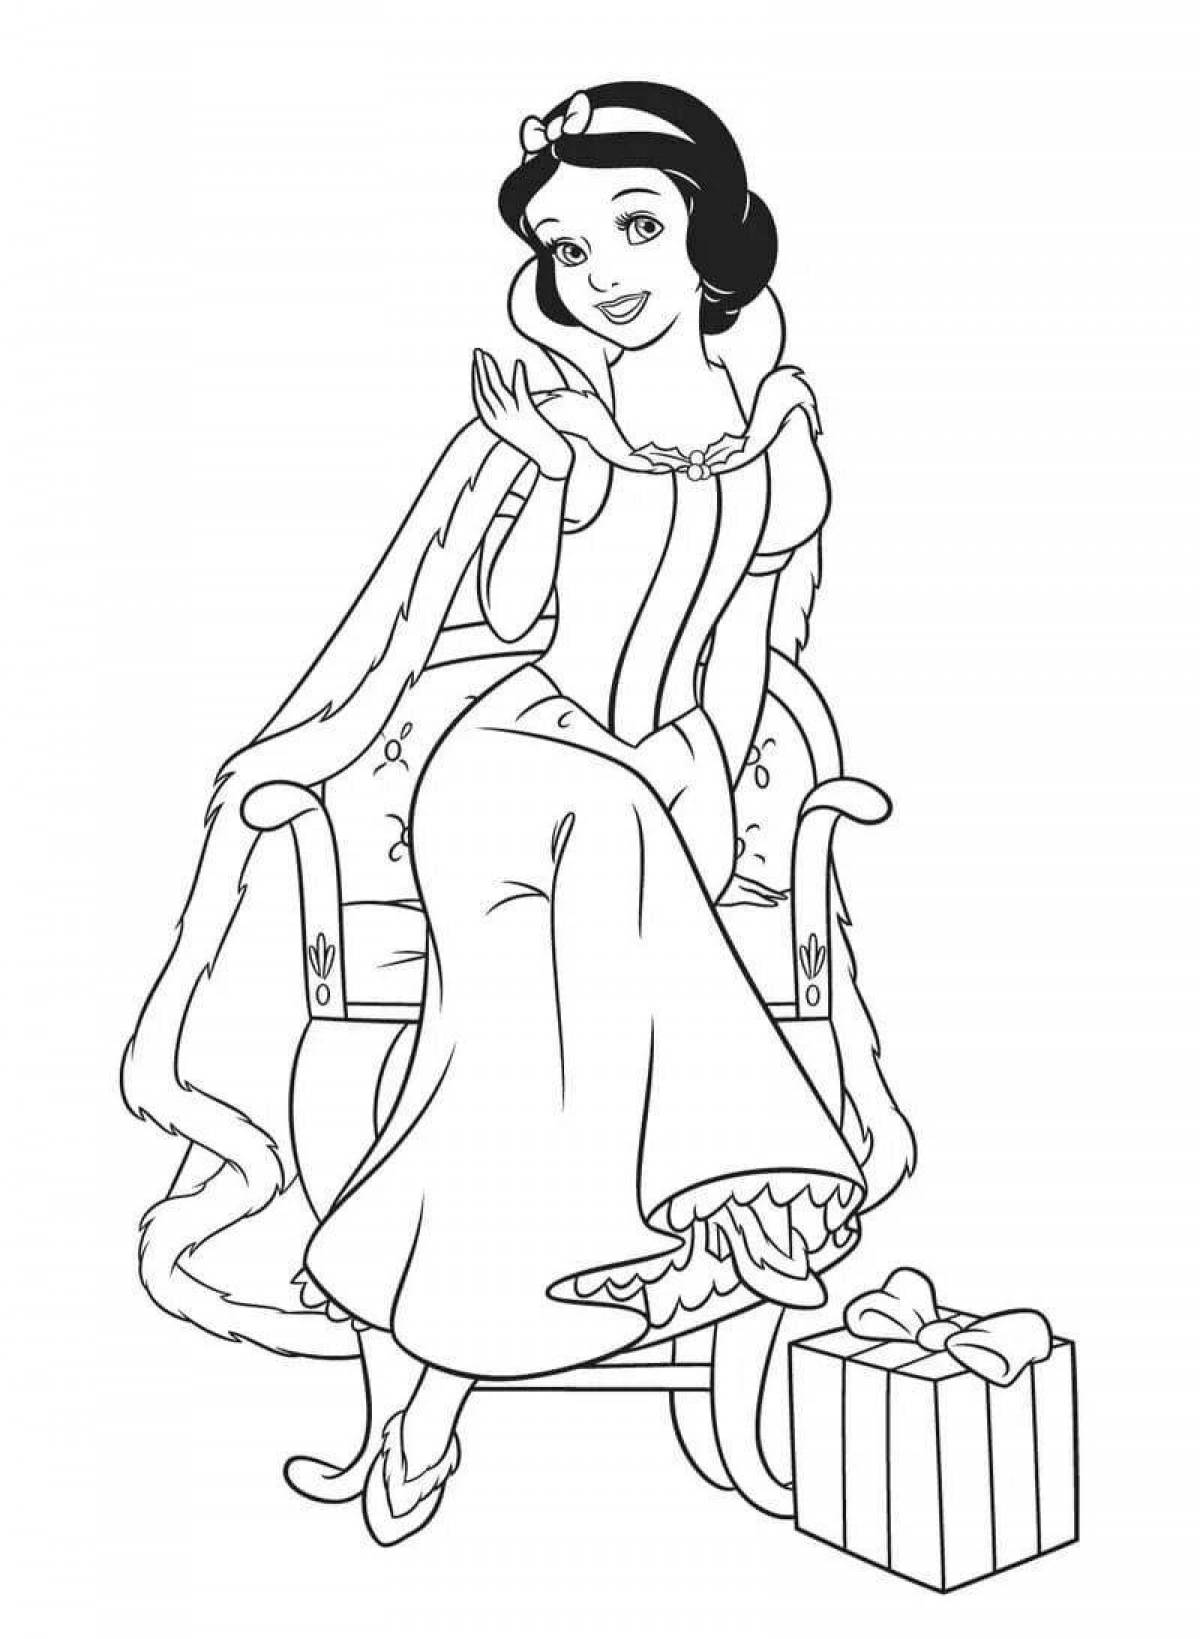 Coloring page charming snow white princess